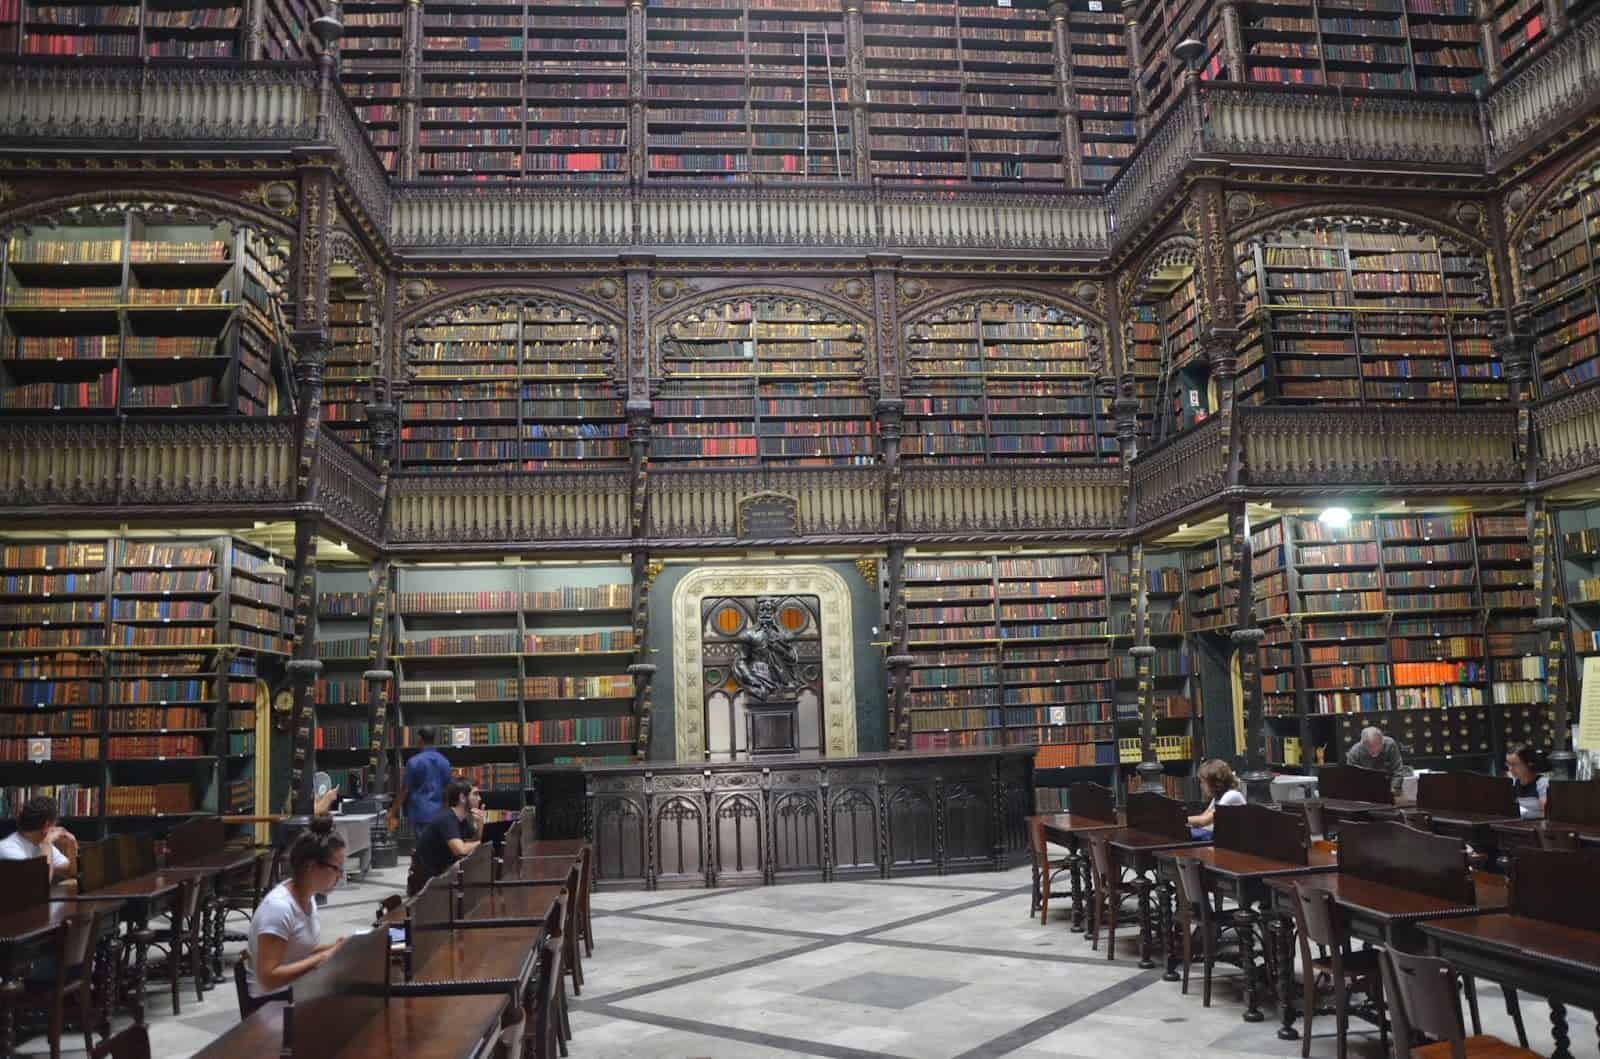 Real Gabinete Português de Leitura in Rio de Janeiro, Brazil